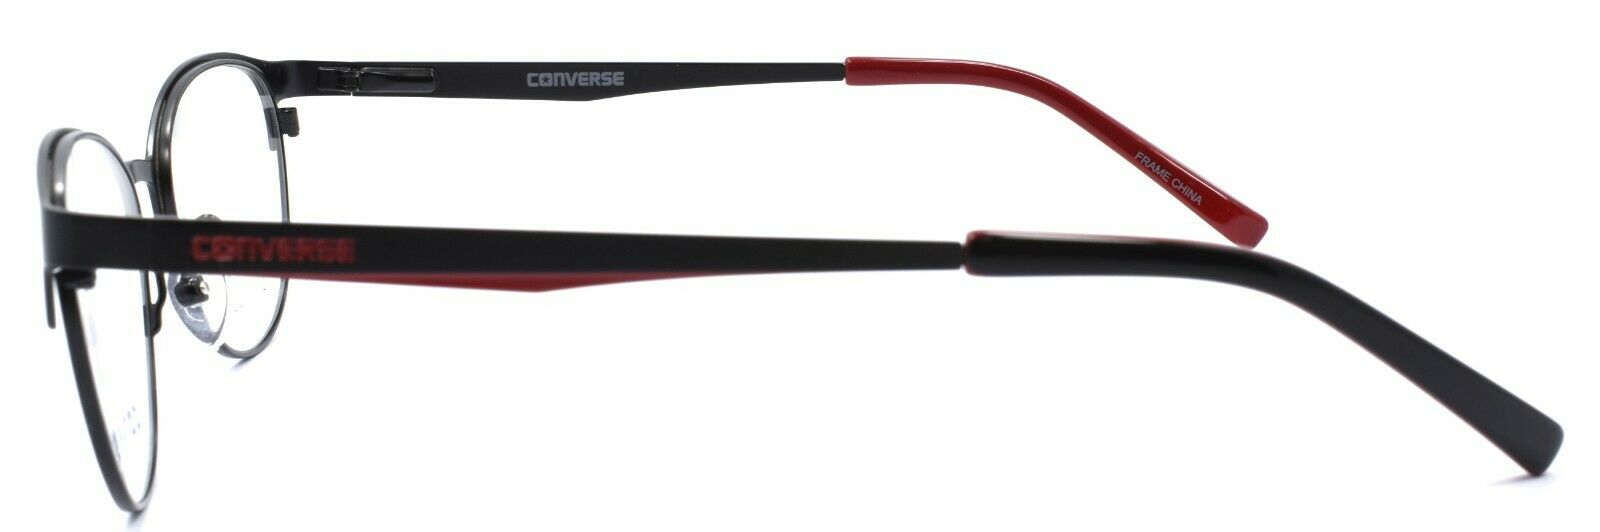 3-CONVERSE G149 Eyeglasses Frames 49-17-140 Black + CASE-751286303001-IKSpecs